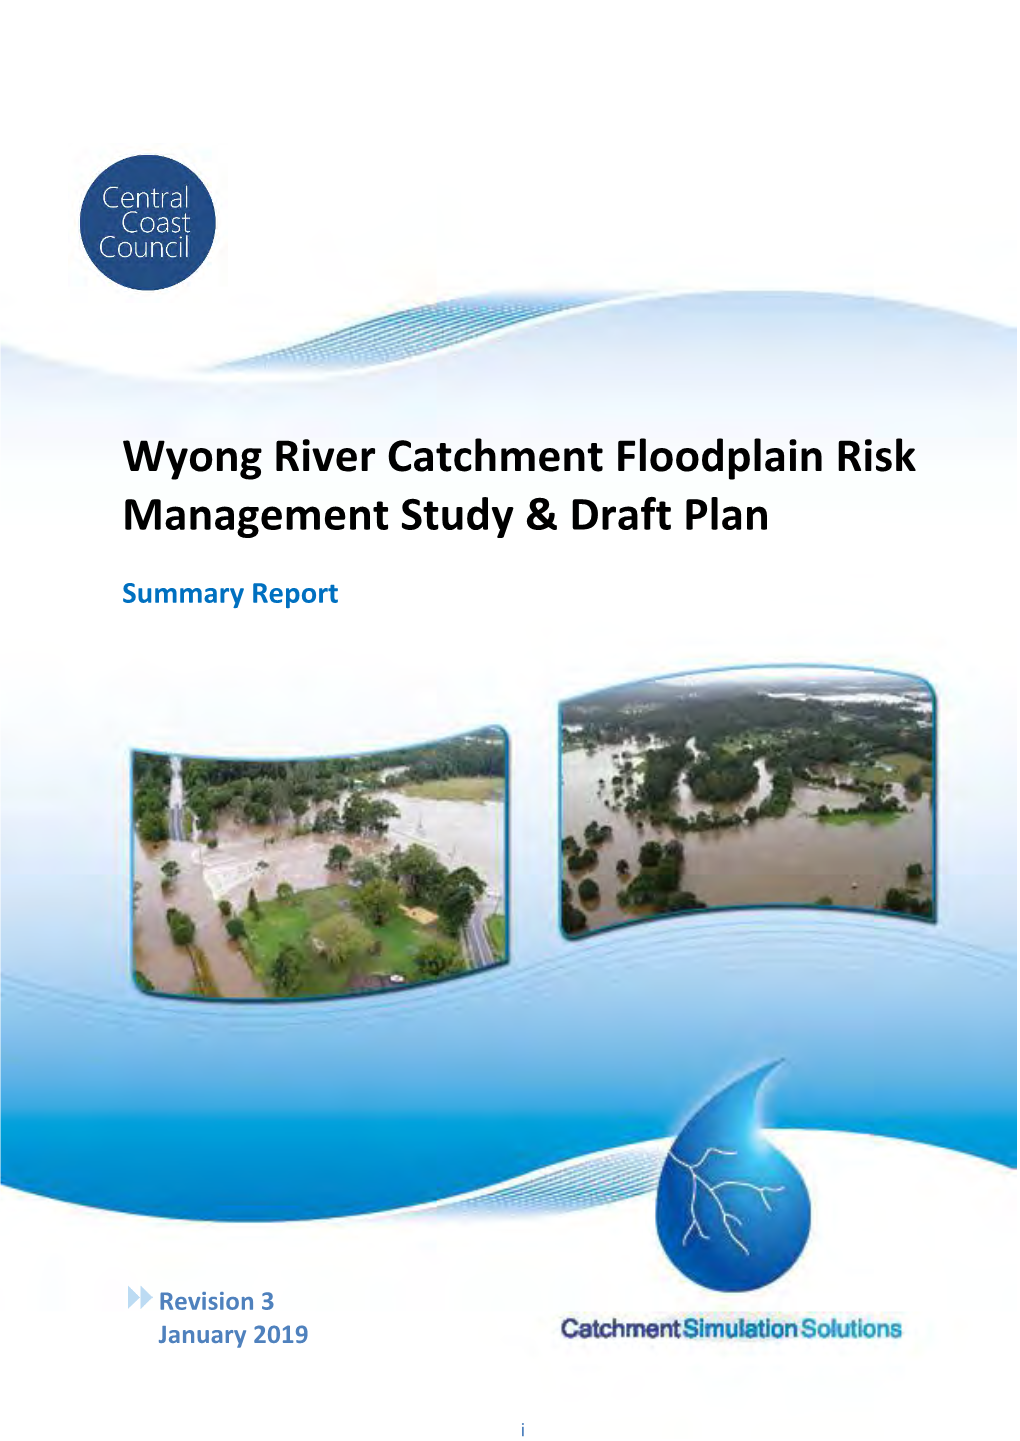 2019 01 00 Wyong River Floodplain Risk Management Study